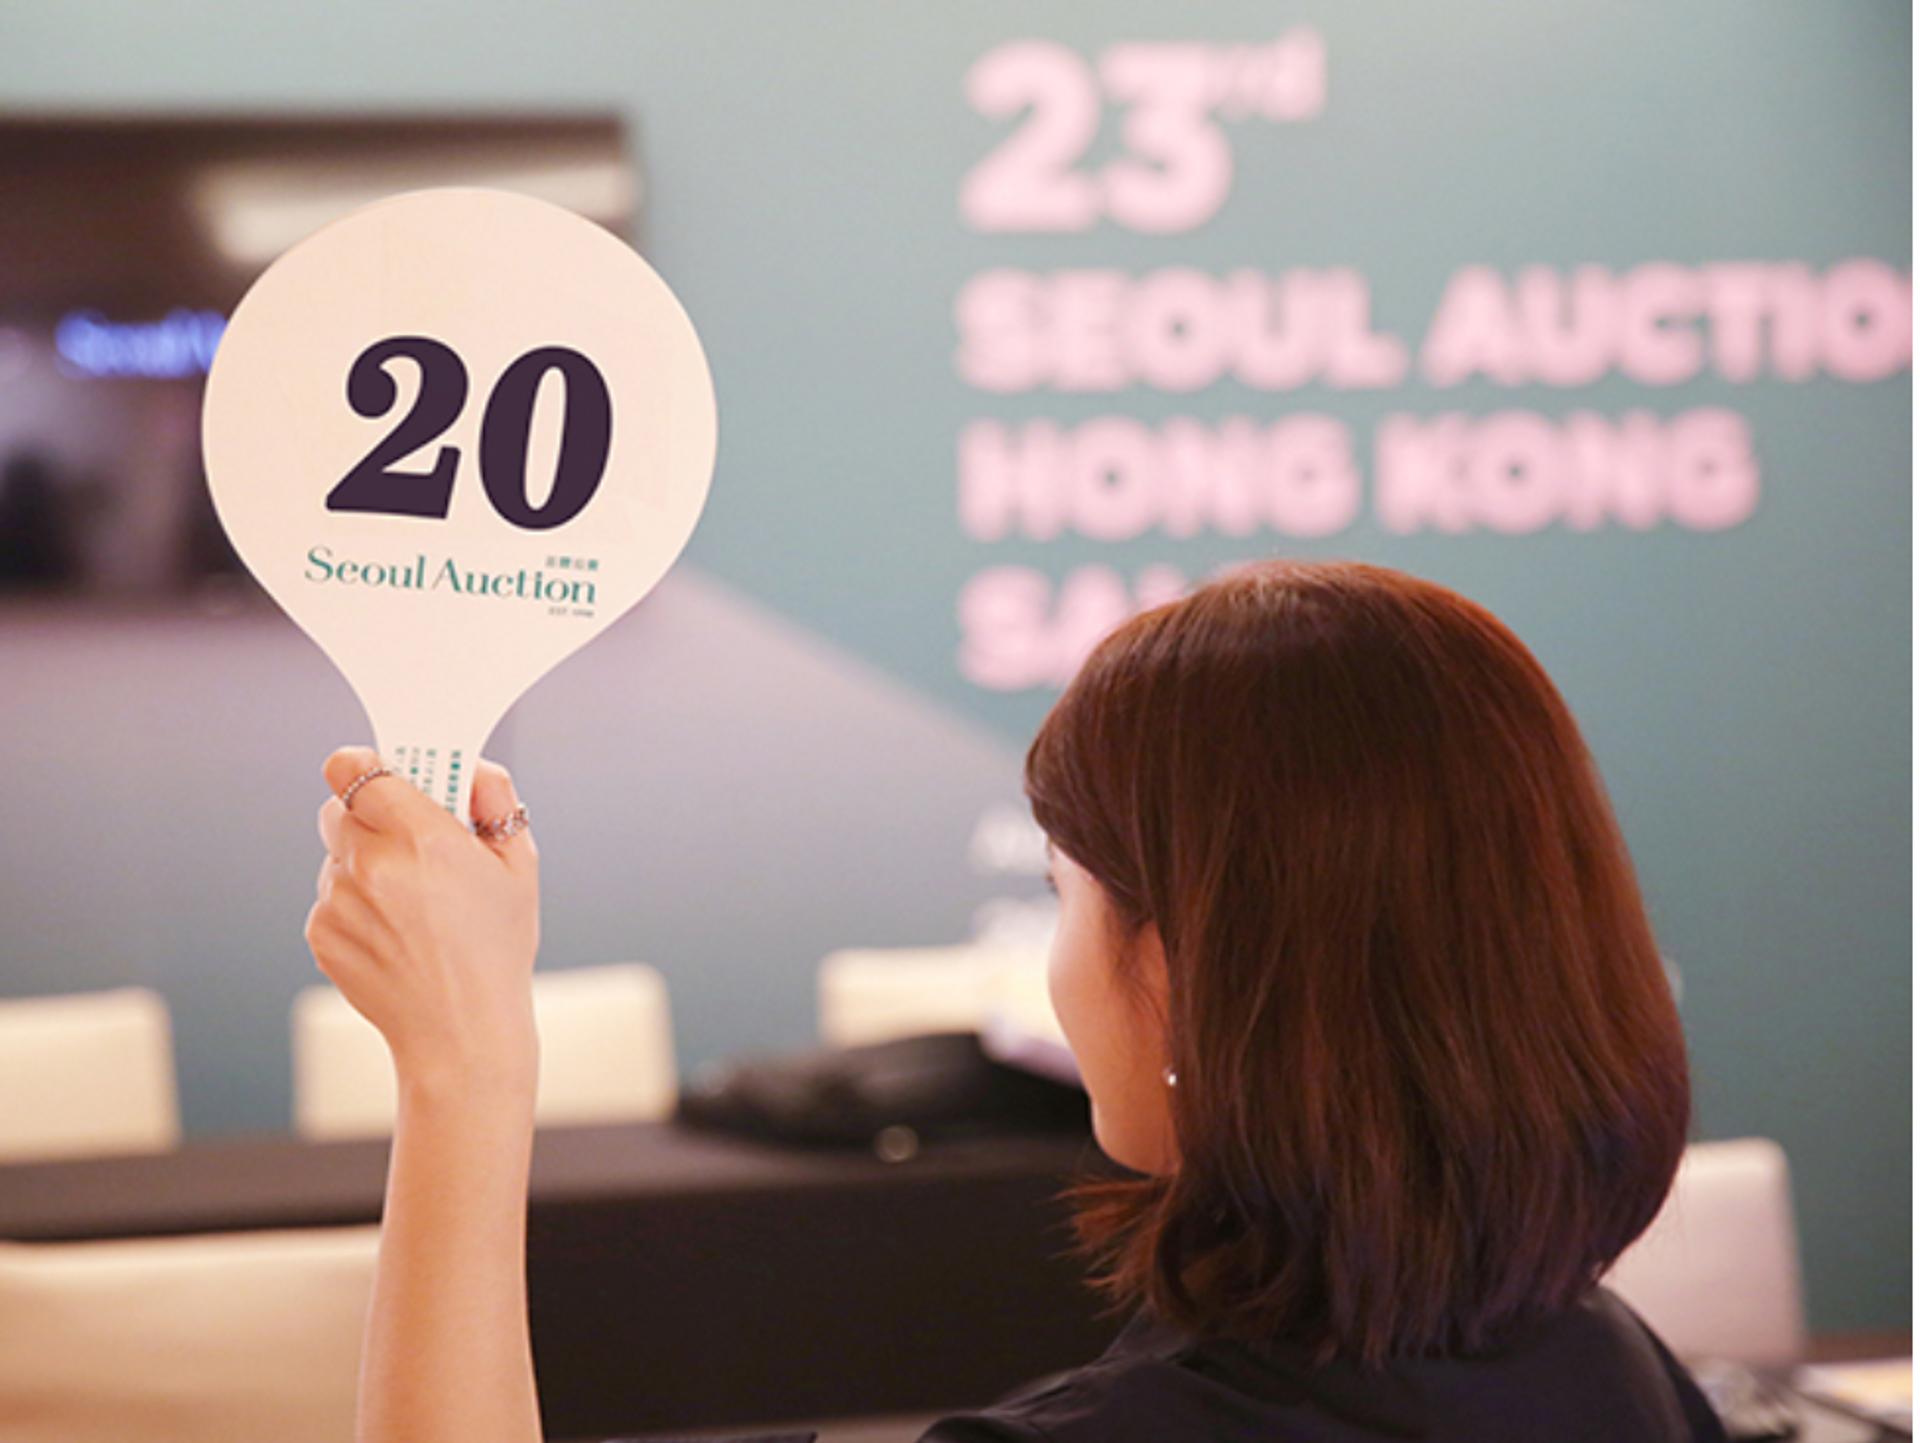 A live sale at Seoul Auction, one of Korea's largest auction houses. Courtesy of Seoul Auction